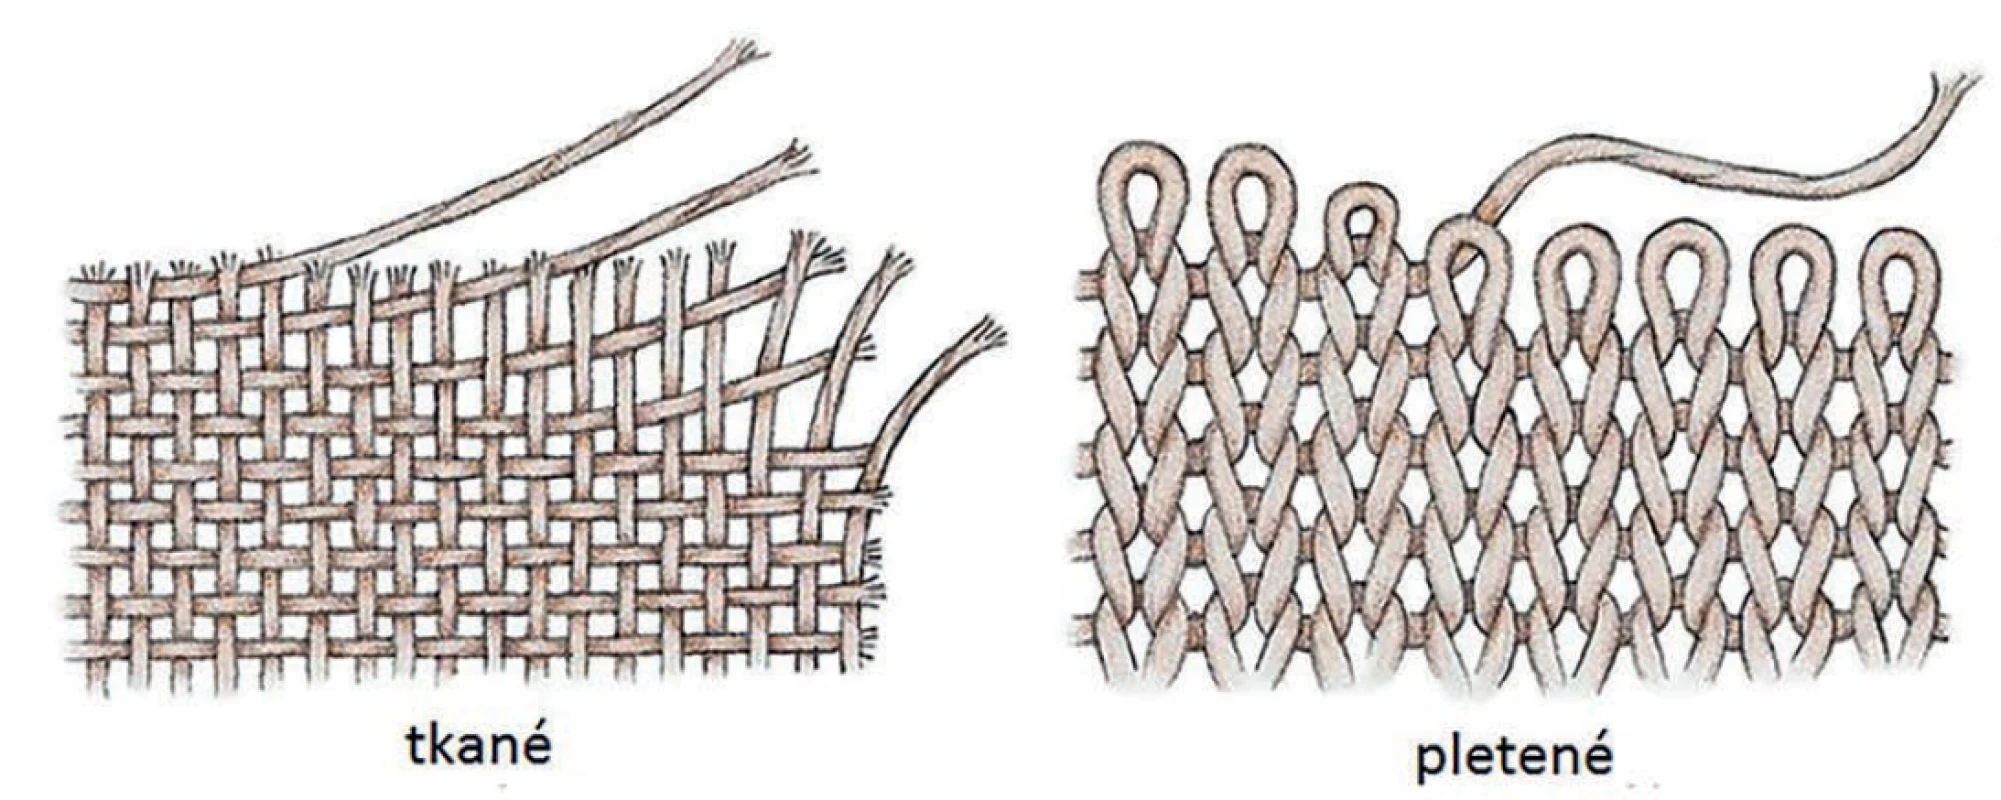 Tkaná a pletená síťka<br>
Fig. 1: Woven and knitted mesh